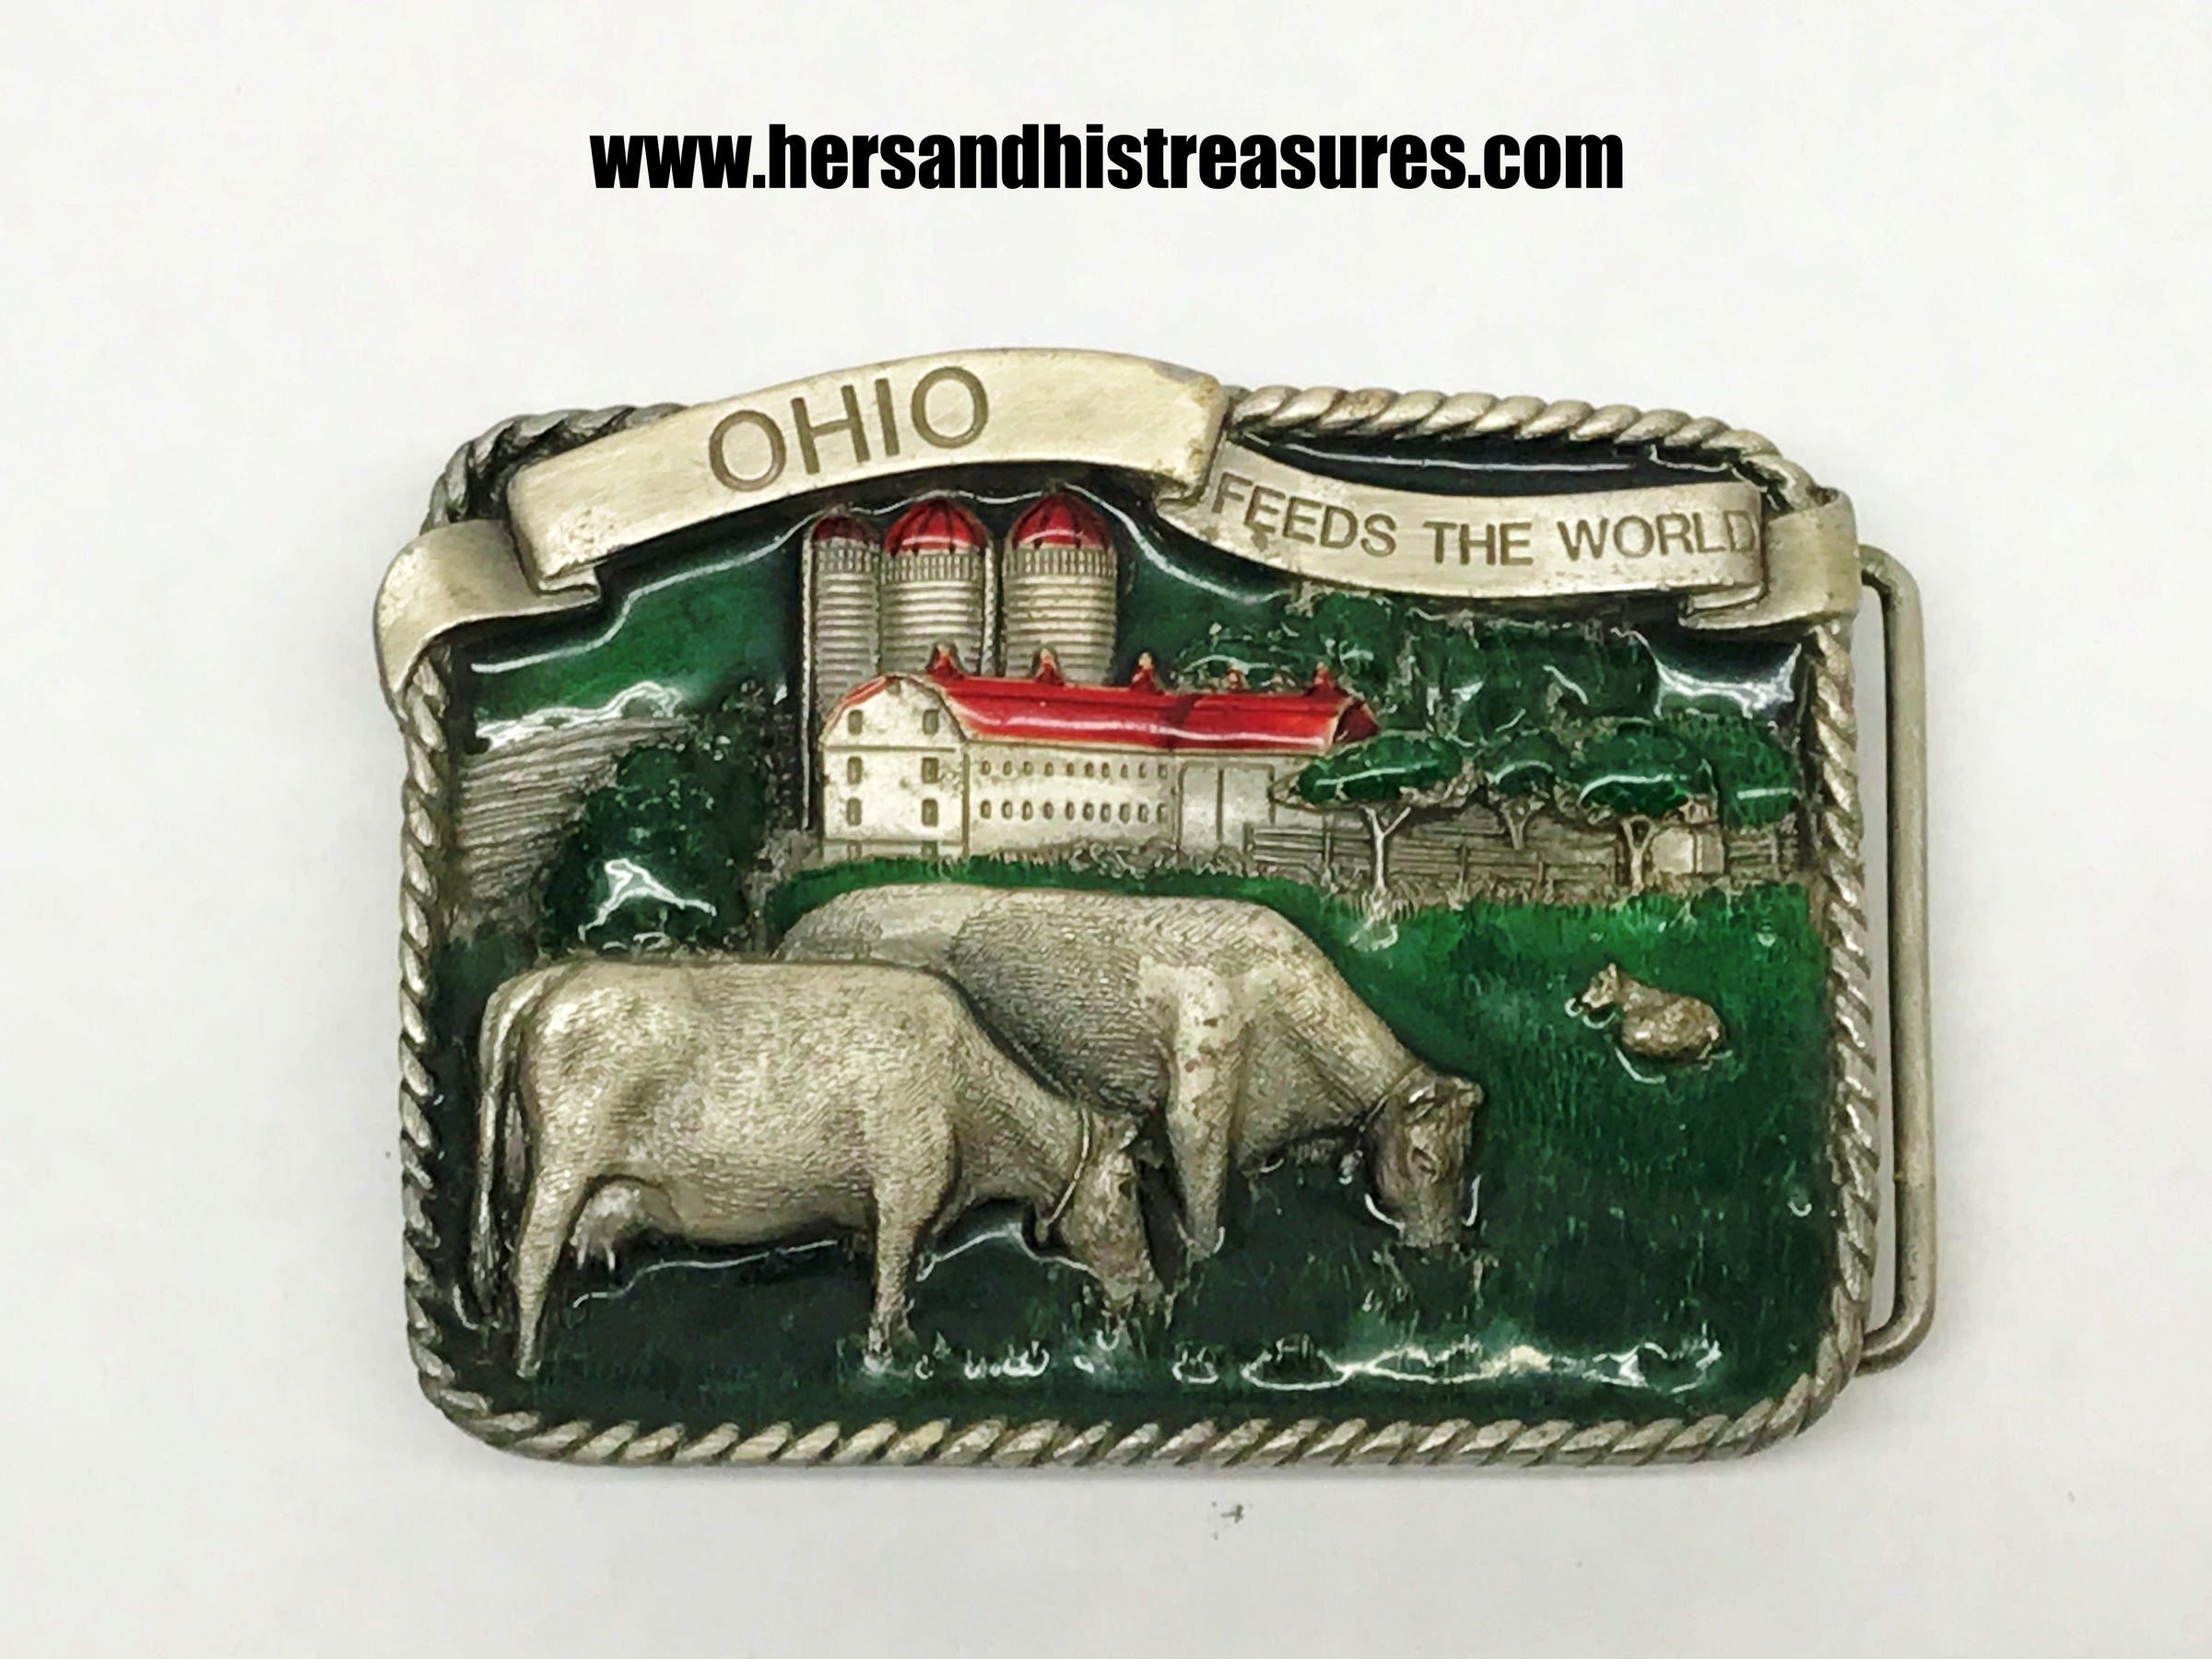 www.hersandhistreasures.com/products/1984-ohio-feeds-the-world-e-26-bergamot-brass-works-belt-buckle-usa